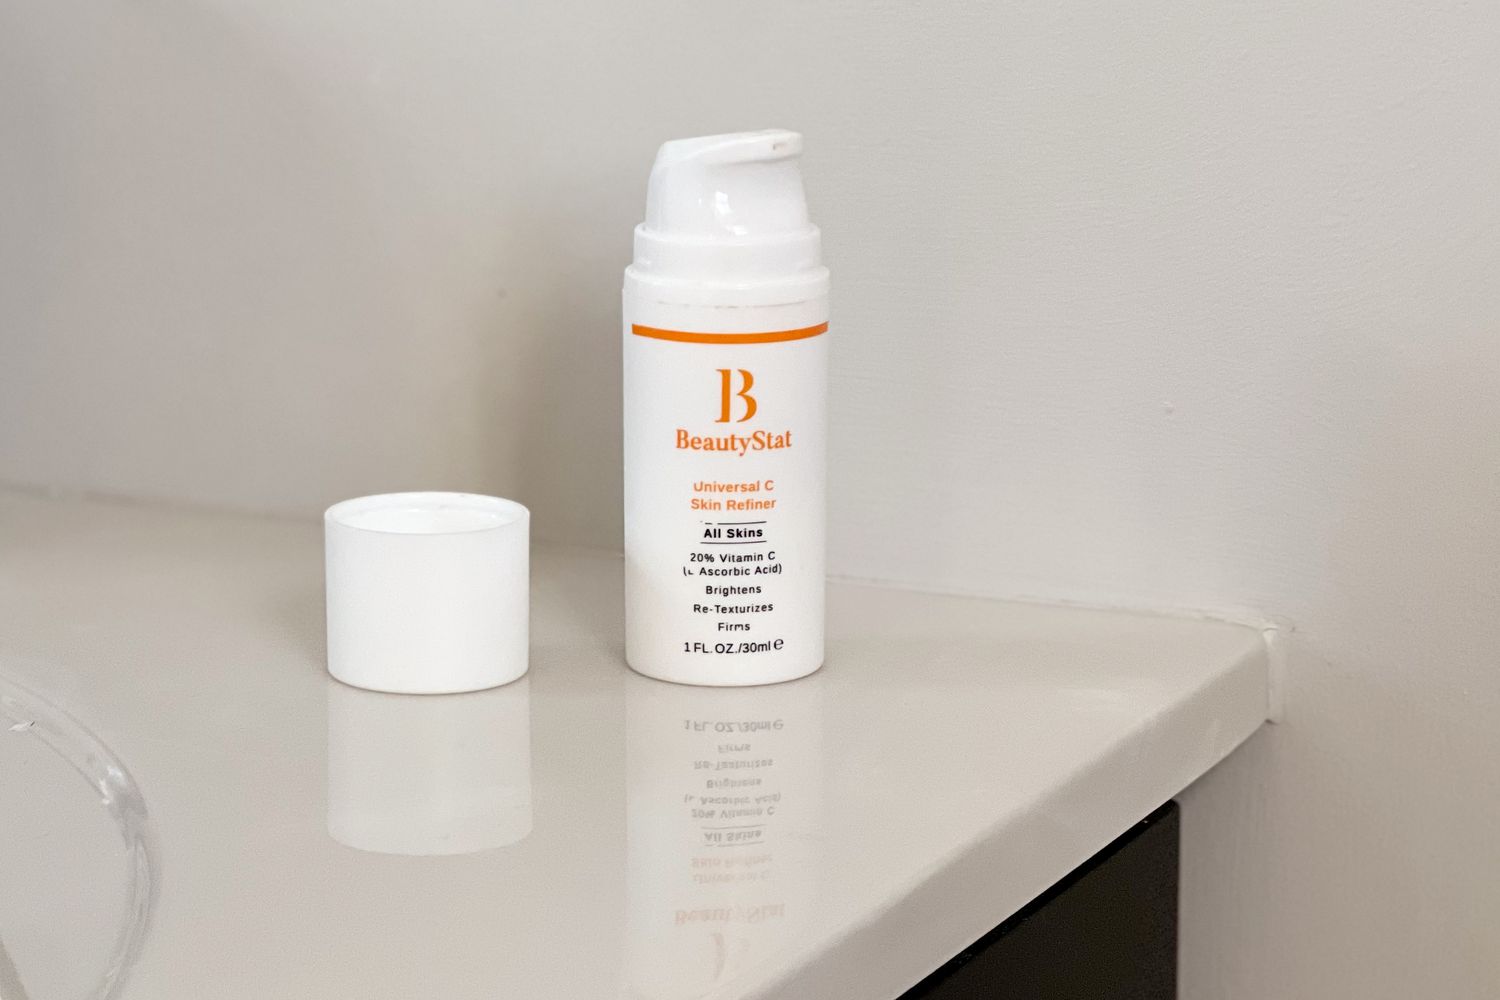 BeautyStat Universal C Skin Refiner displayed on white countertop next to cap